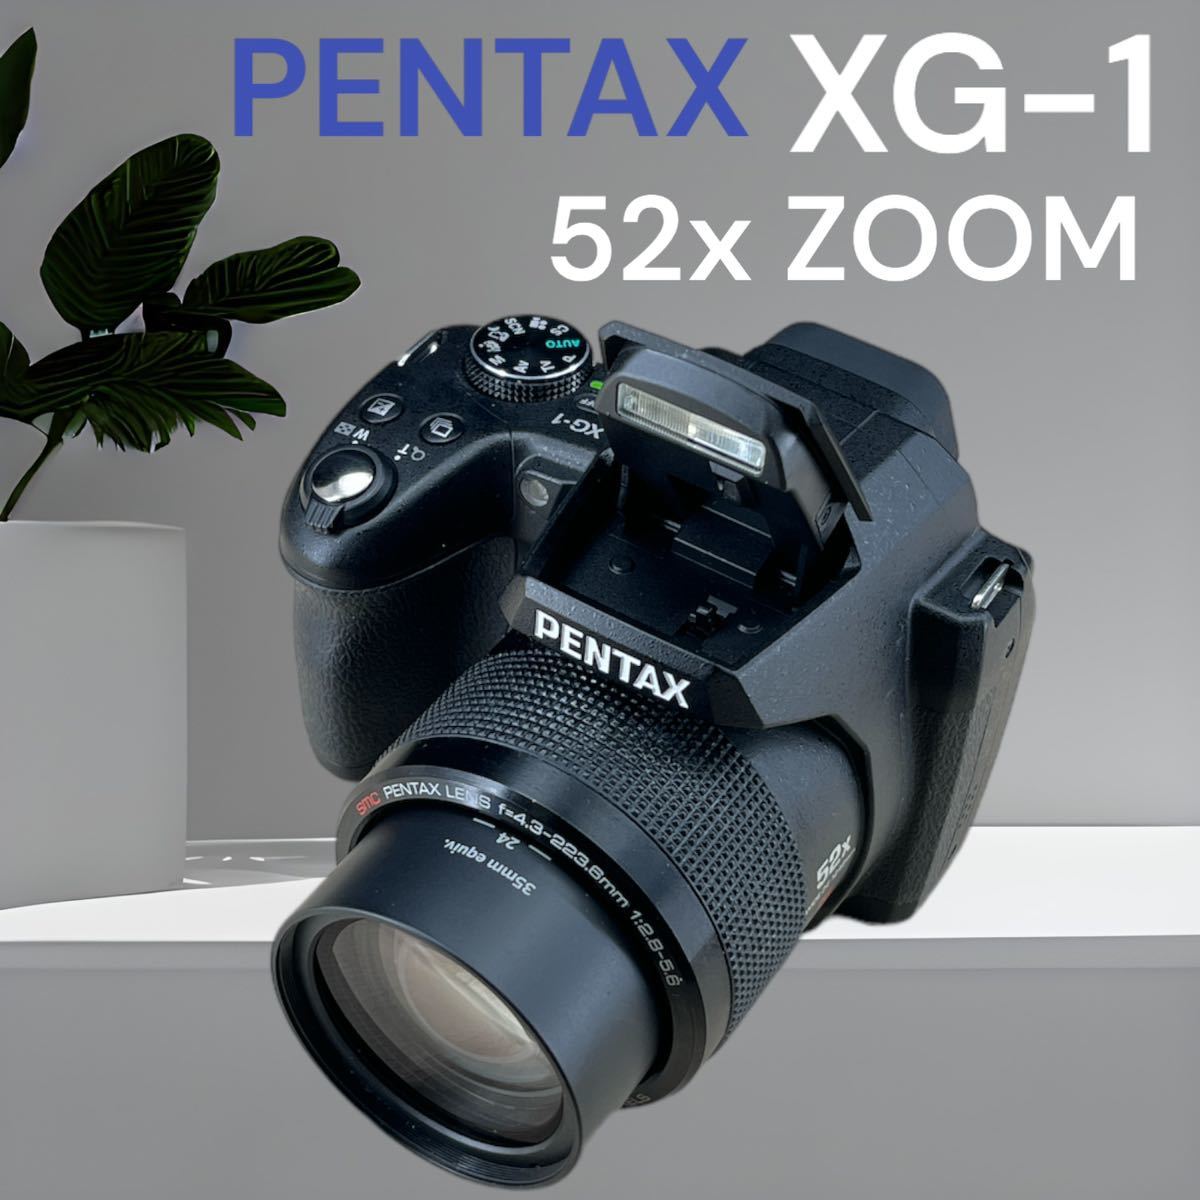 『52倍ズーム ネオ一眼』PENTAX XG-1 smc PENTAX 4.3-223.6mm 1:2.8-5.6 動作 美品 _画像3